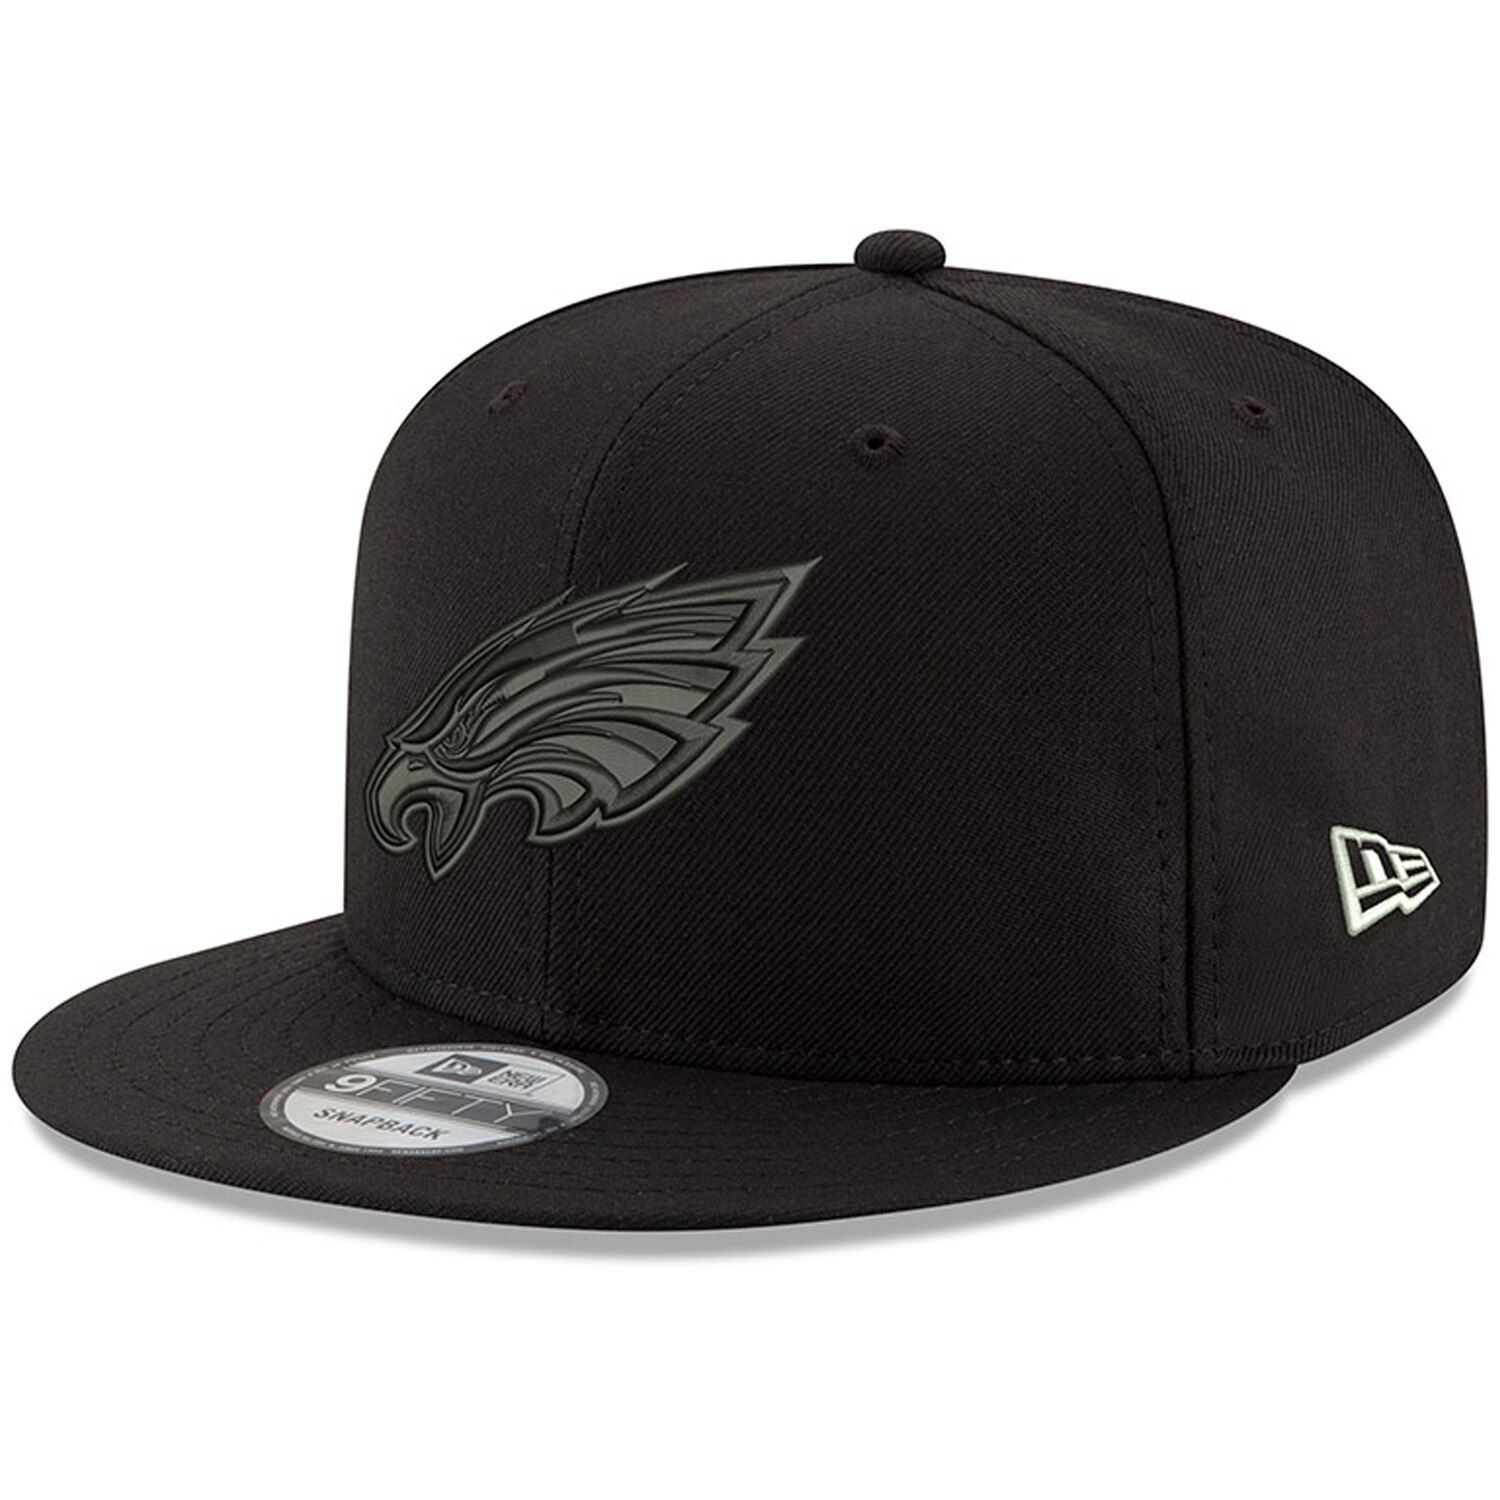 black philadelphia eagles hat